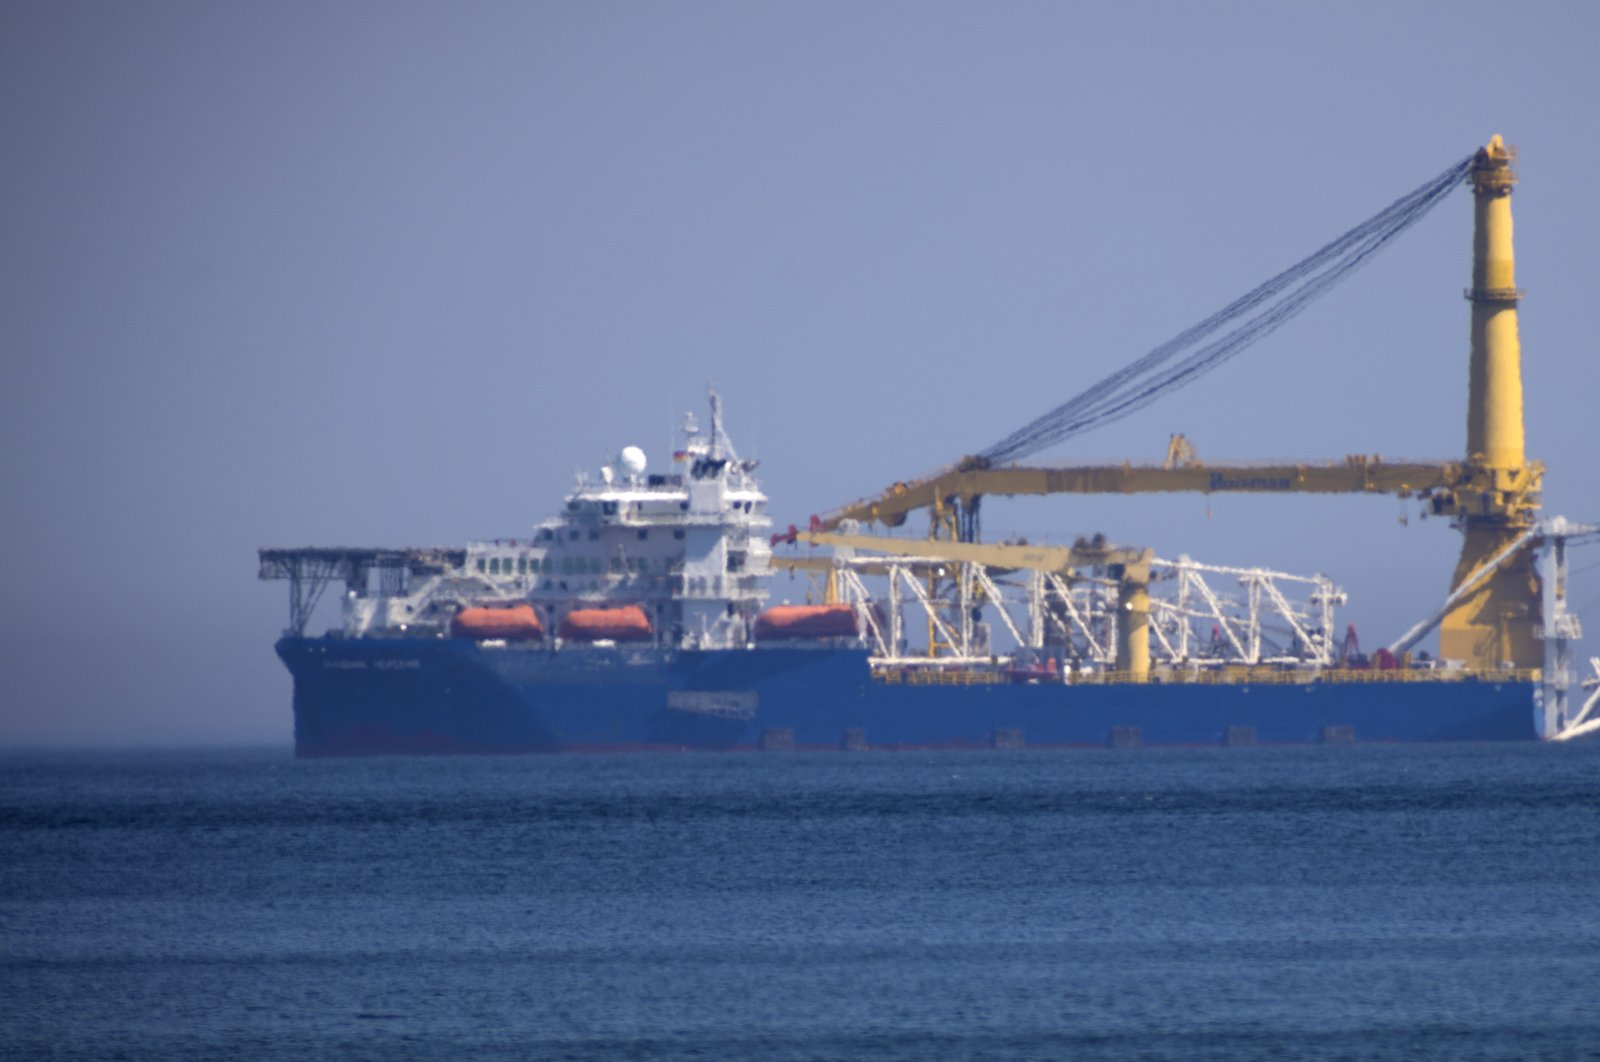 Russian pipe layer vessel "Akademik Cherskiy" is at anchor in Binz, island Ruegen, northern Germany, May 10, 2020. (EPA Photo)